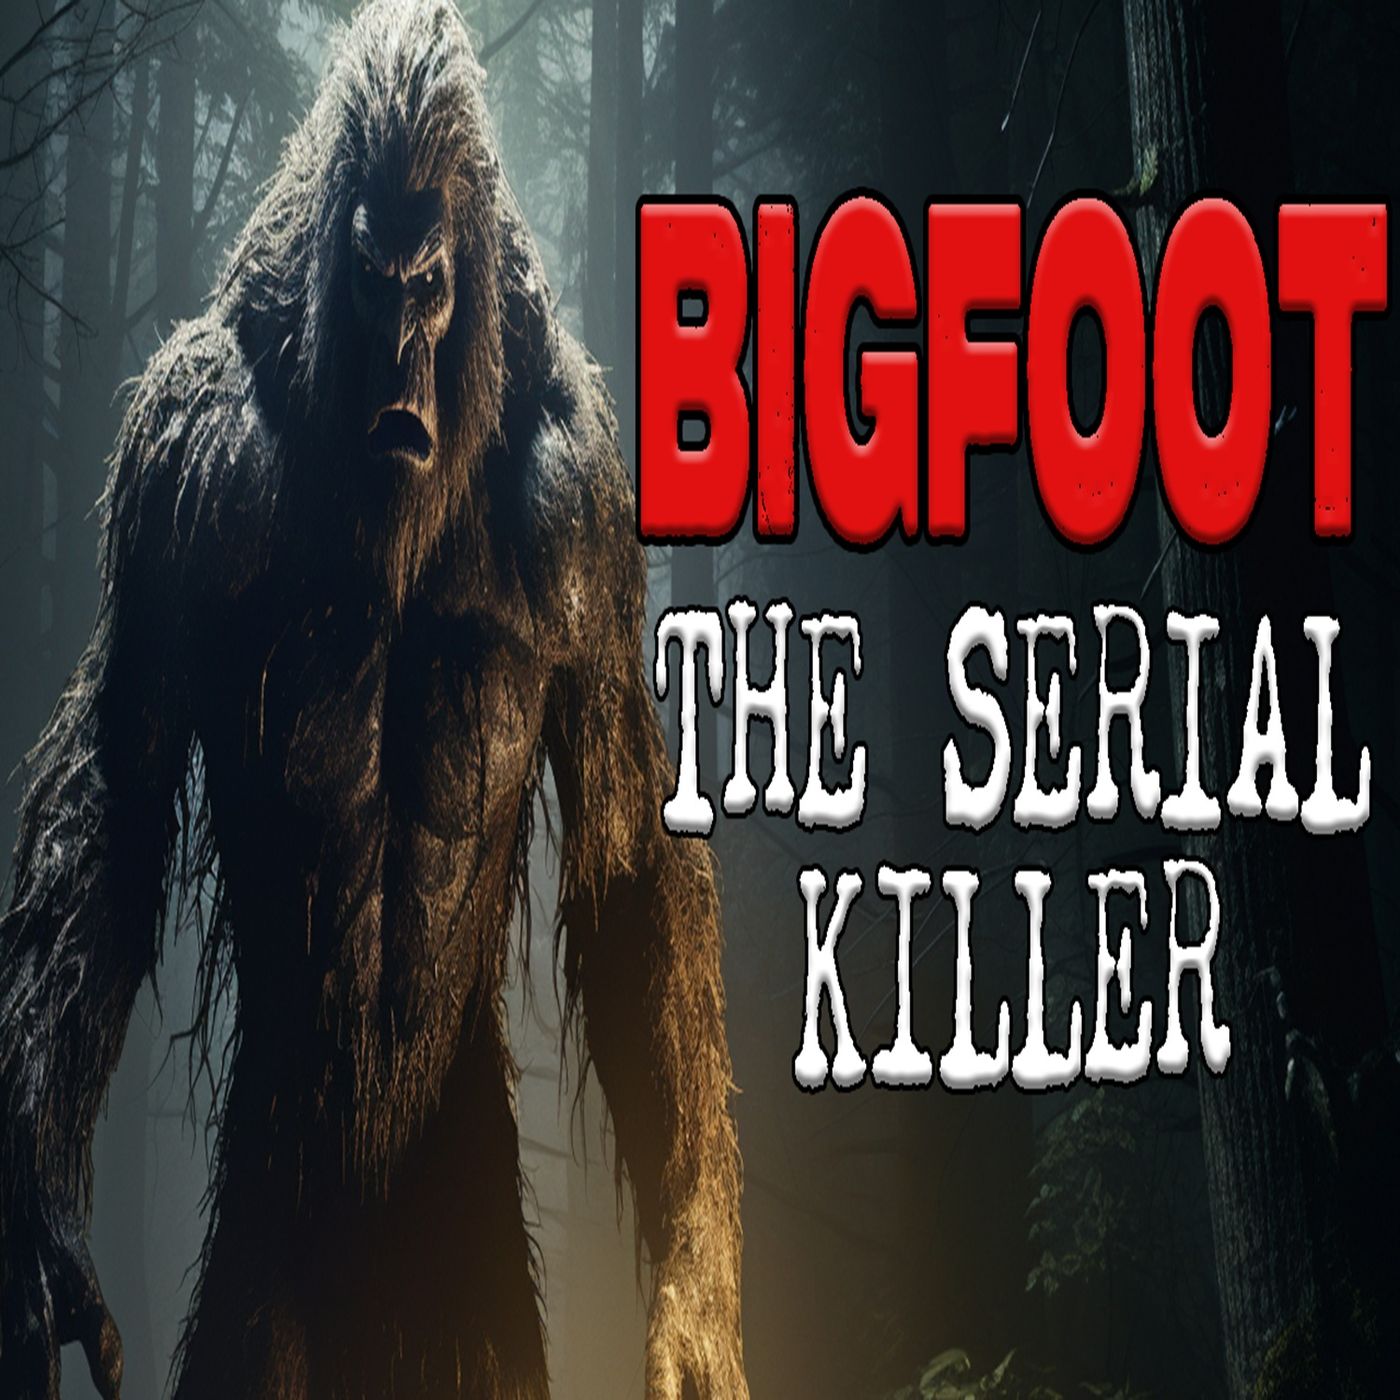 Bigfoot is a Serial Killer